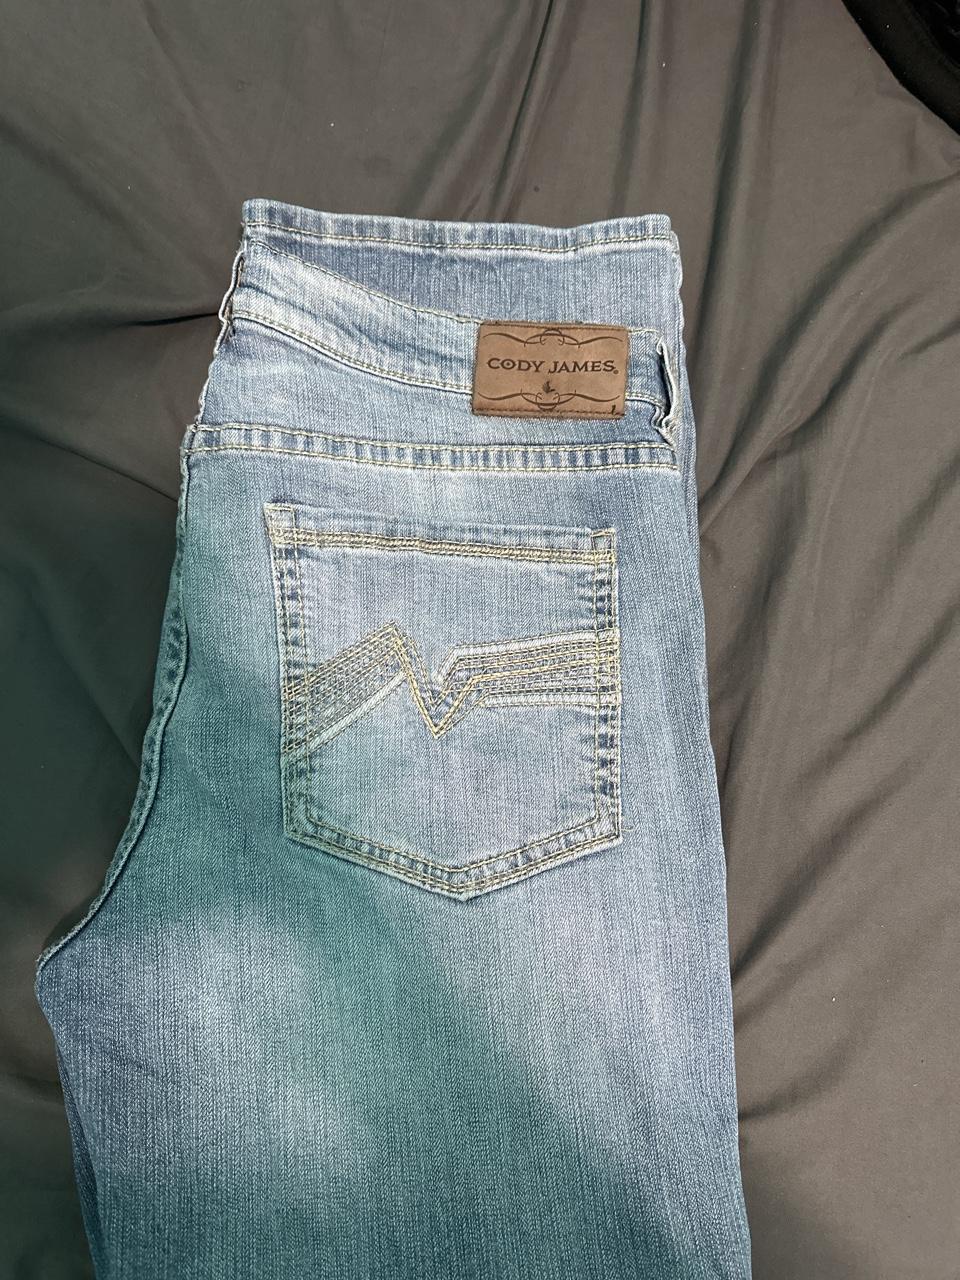 Cody James Men's Jeans